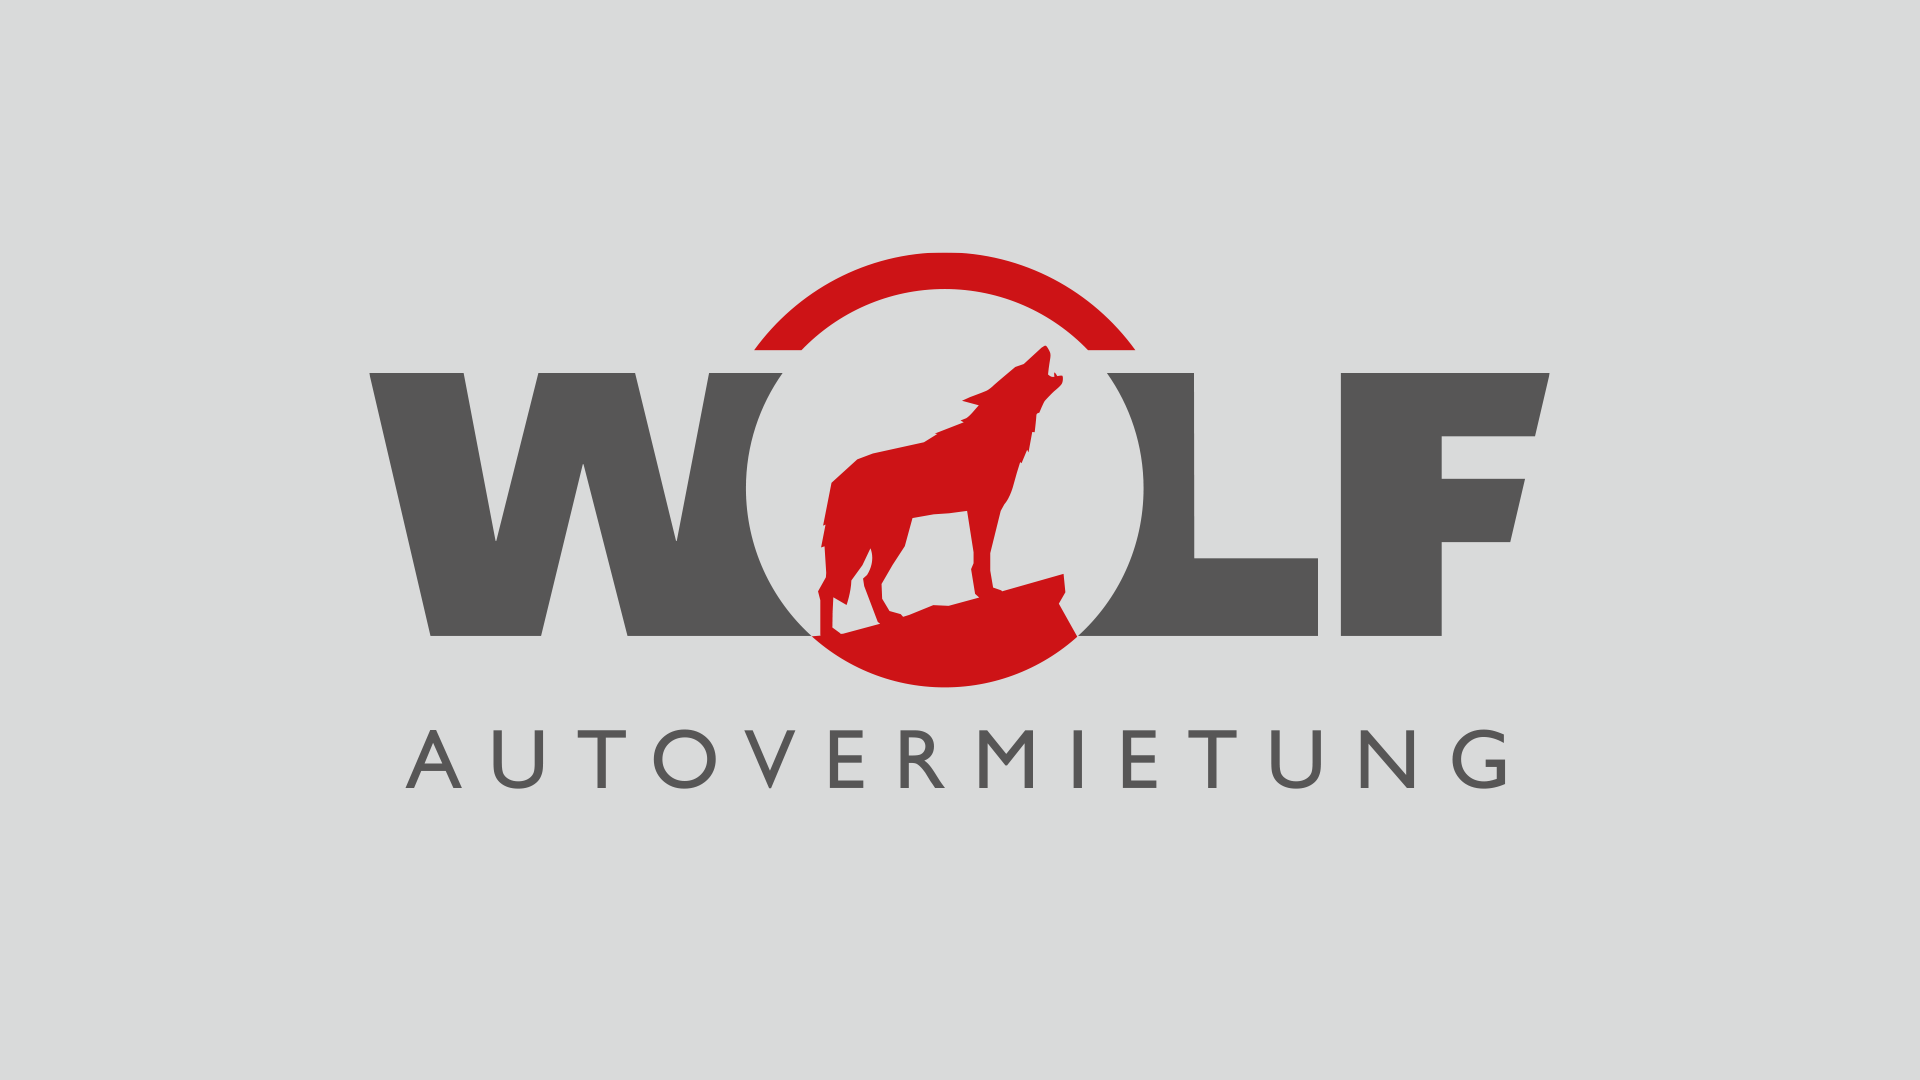 (c) Autovermietung-wolf.de